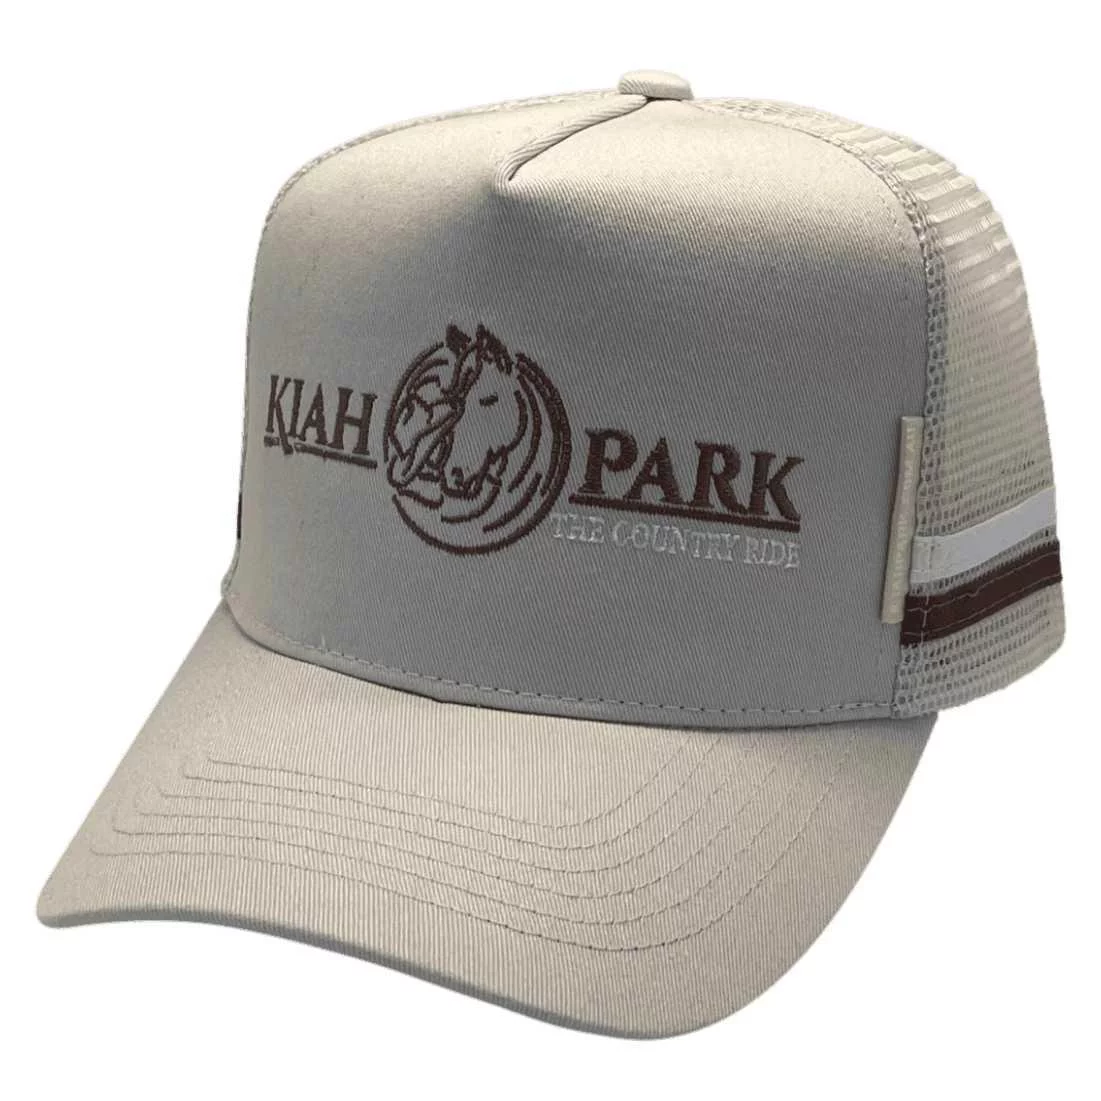 Kiah Park Beenaam Valley QLD HP Original Basic Aussie Trucker Hat with Australian Head Fit Crown and 2 Sidebands Cream White Brown